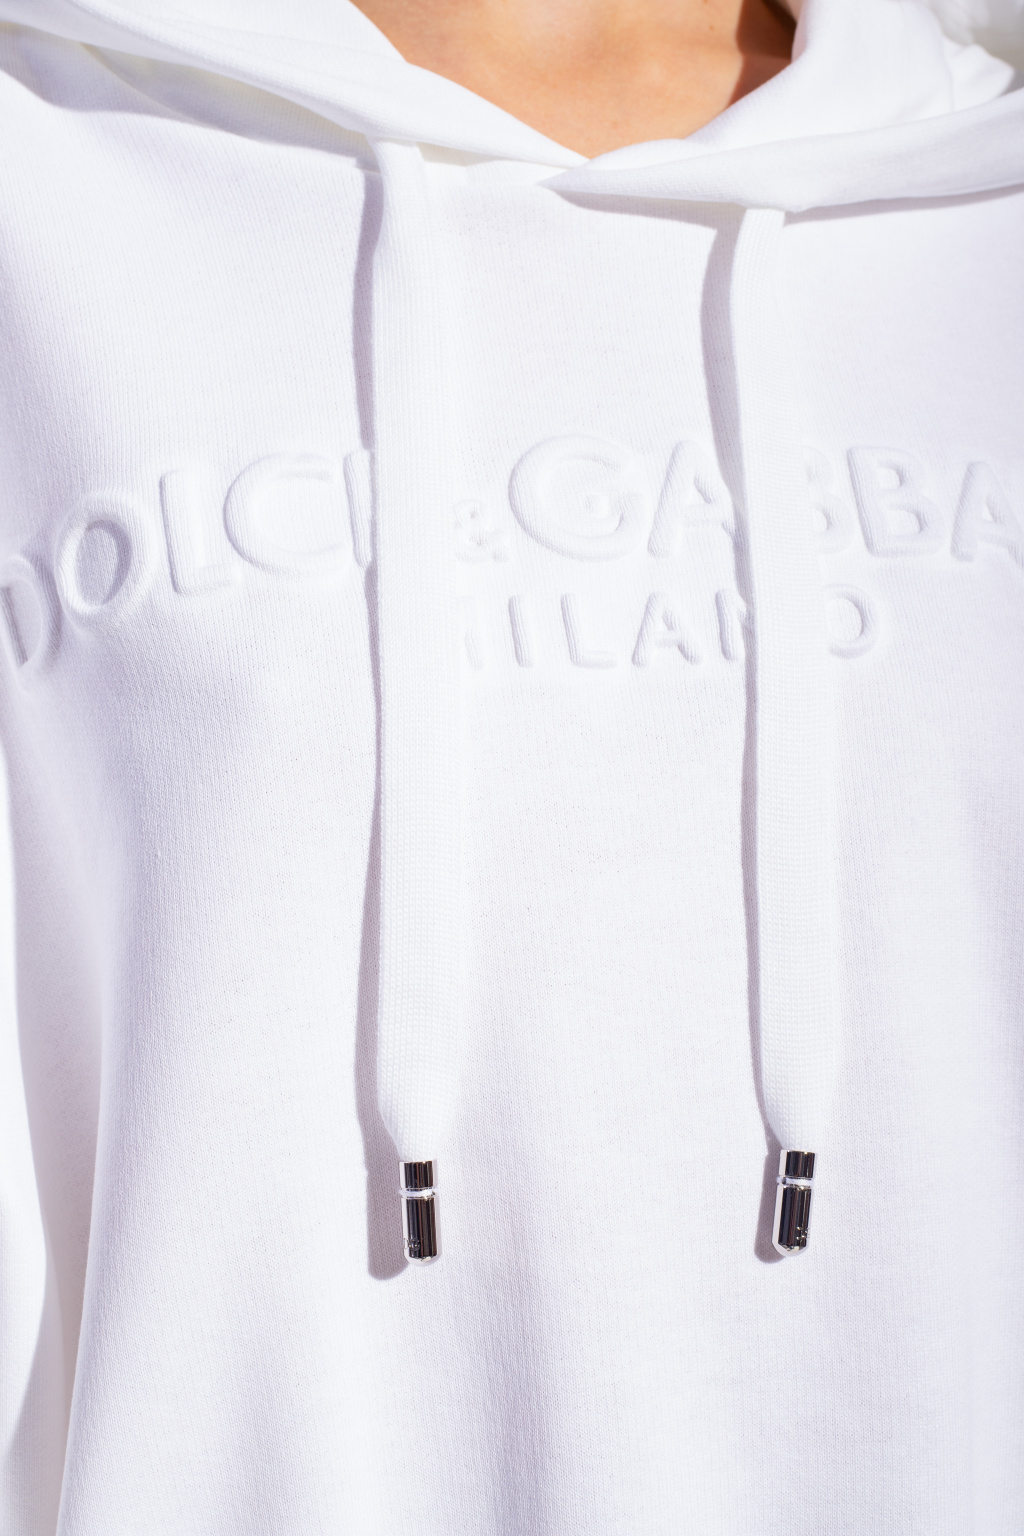 jacket with libidinous motif dolce gabbana jacket fpsgc hrtyn Dolce & Gabbana colour-block logo bikini